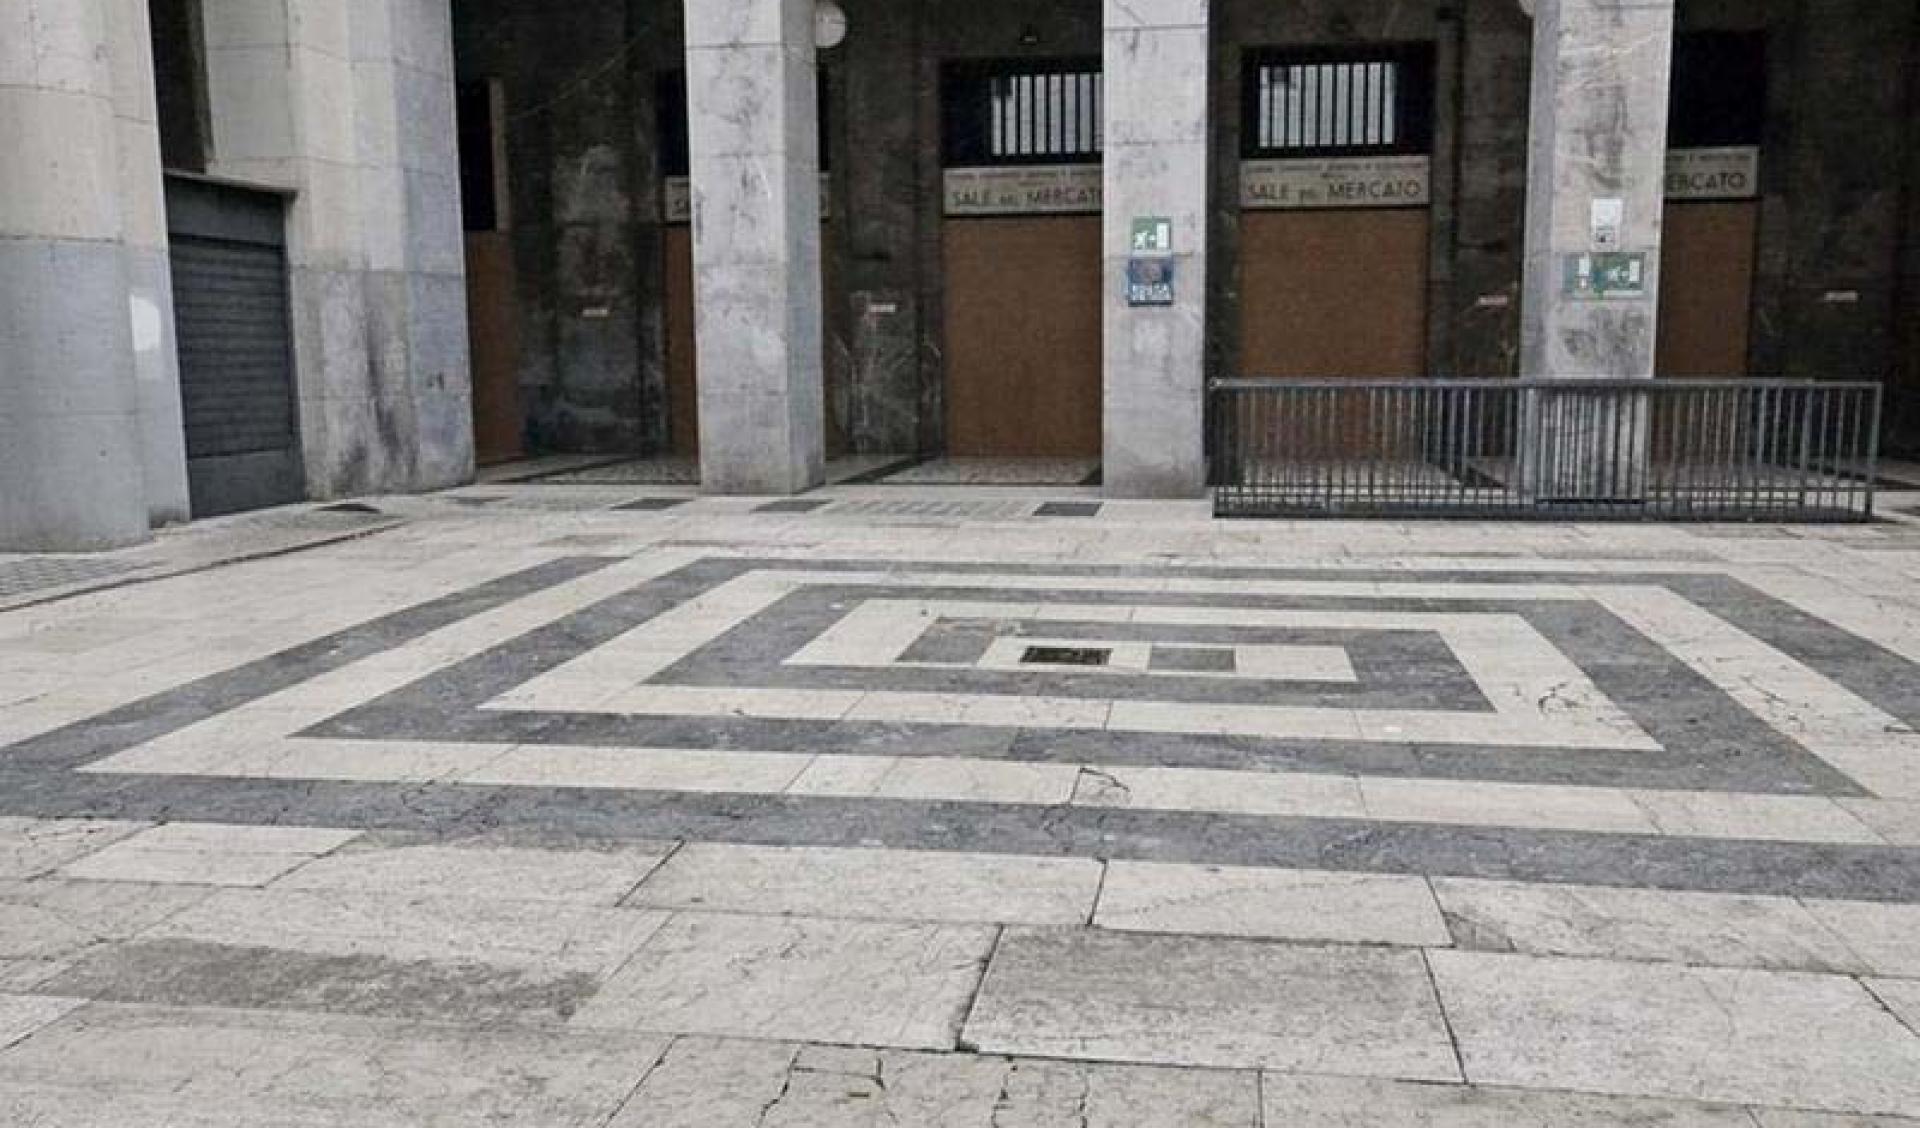 Restoration of the flooring piazza quadriportico Brescia